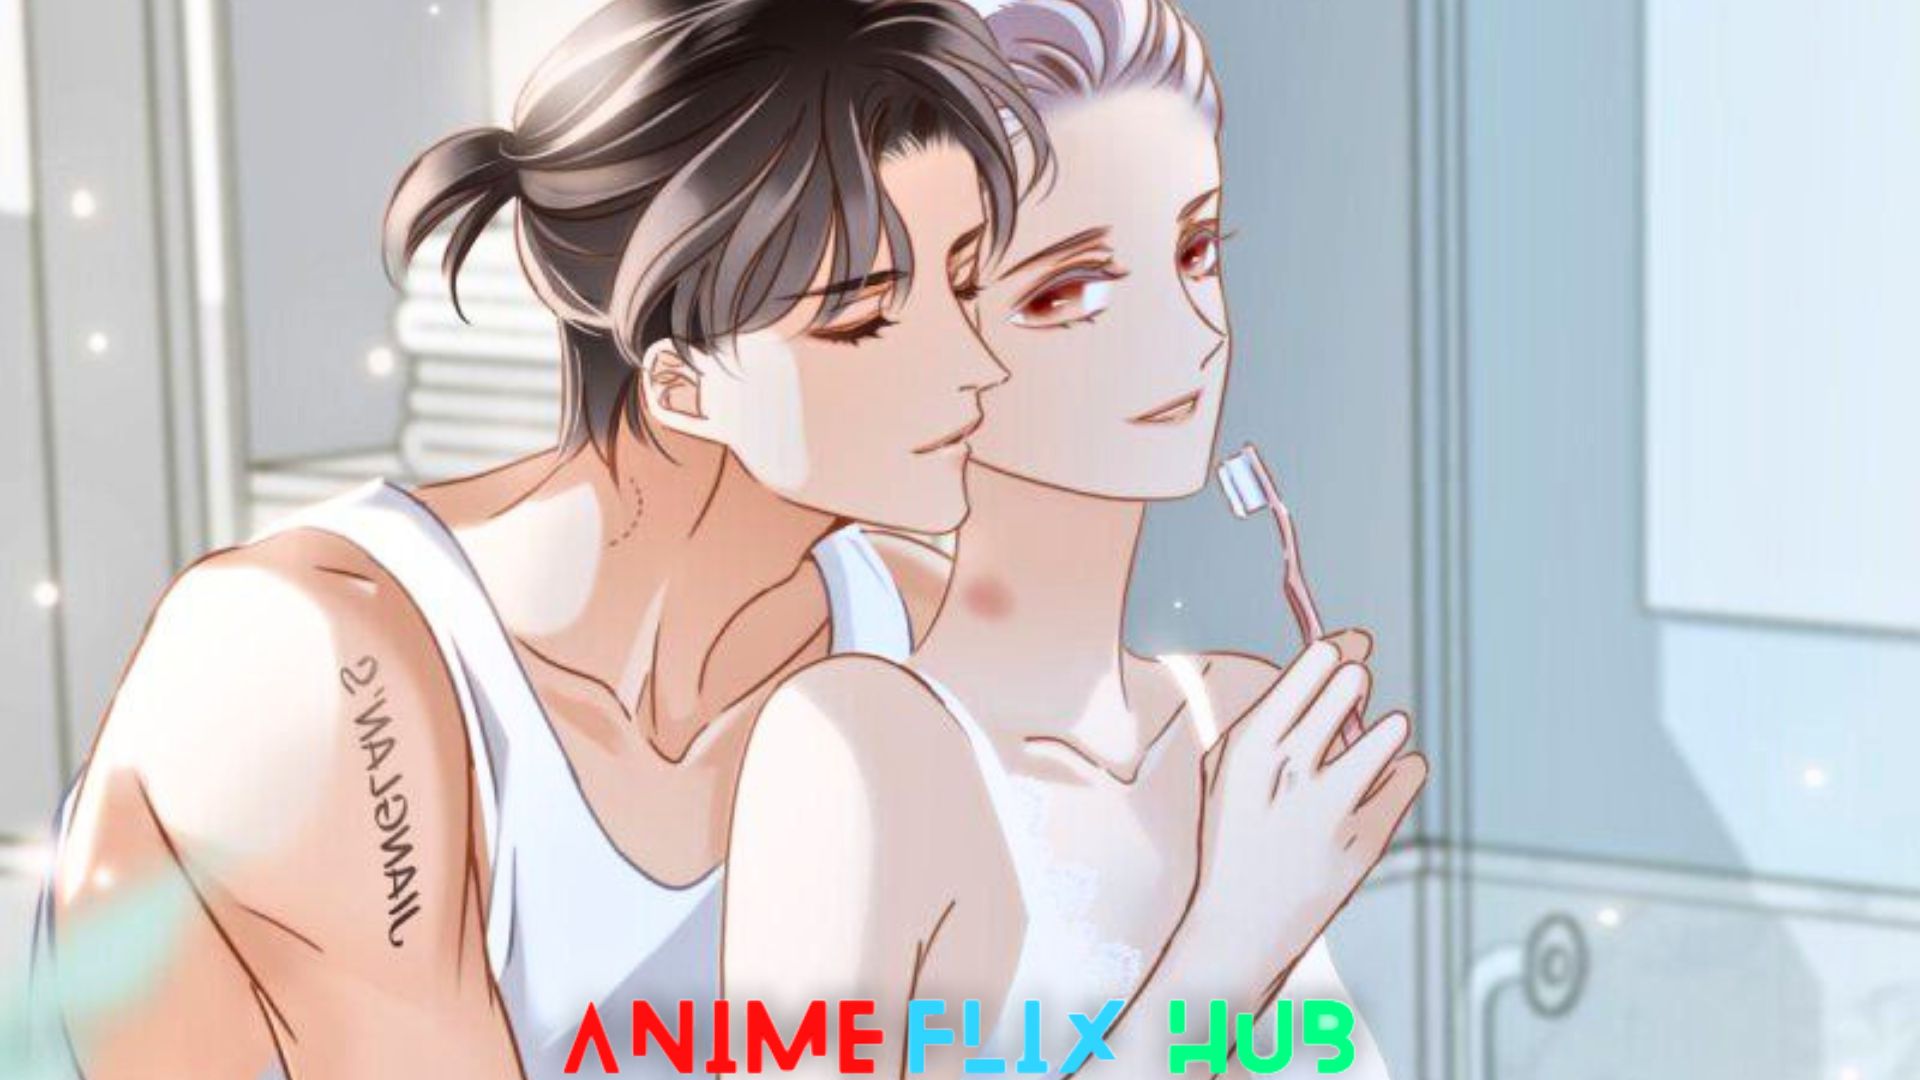 1st Kiss Manga